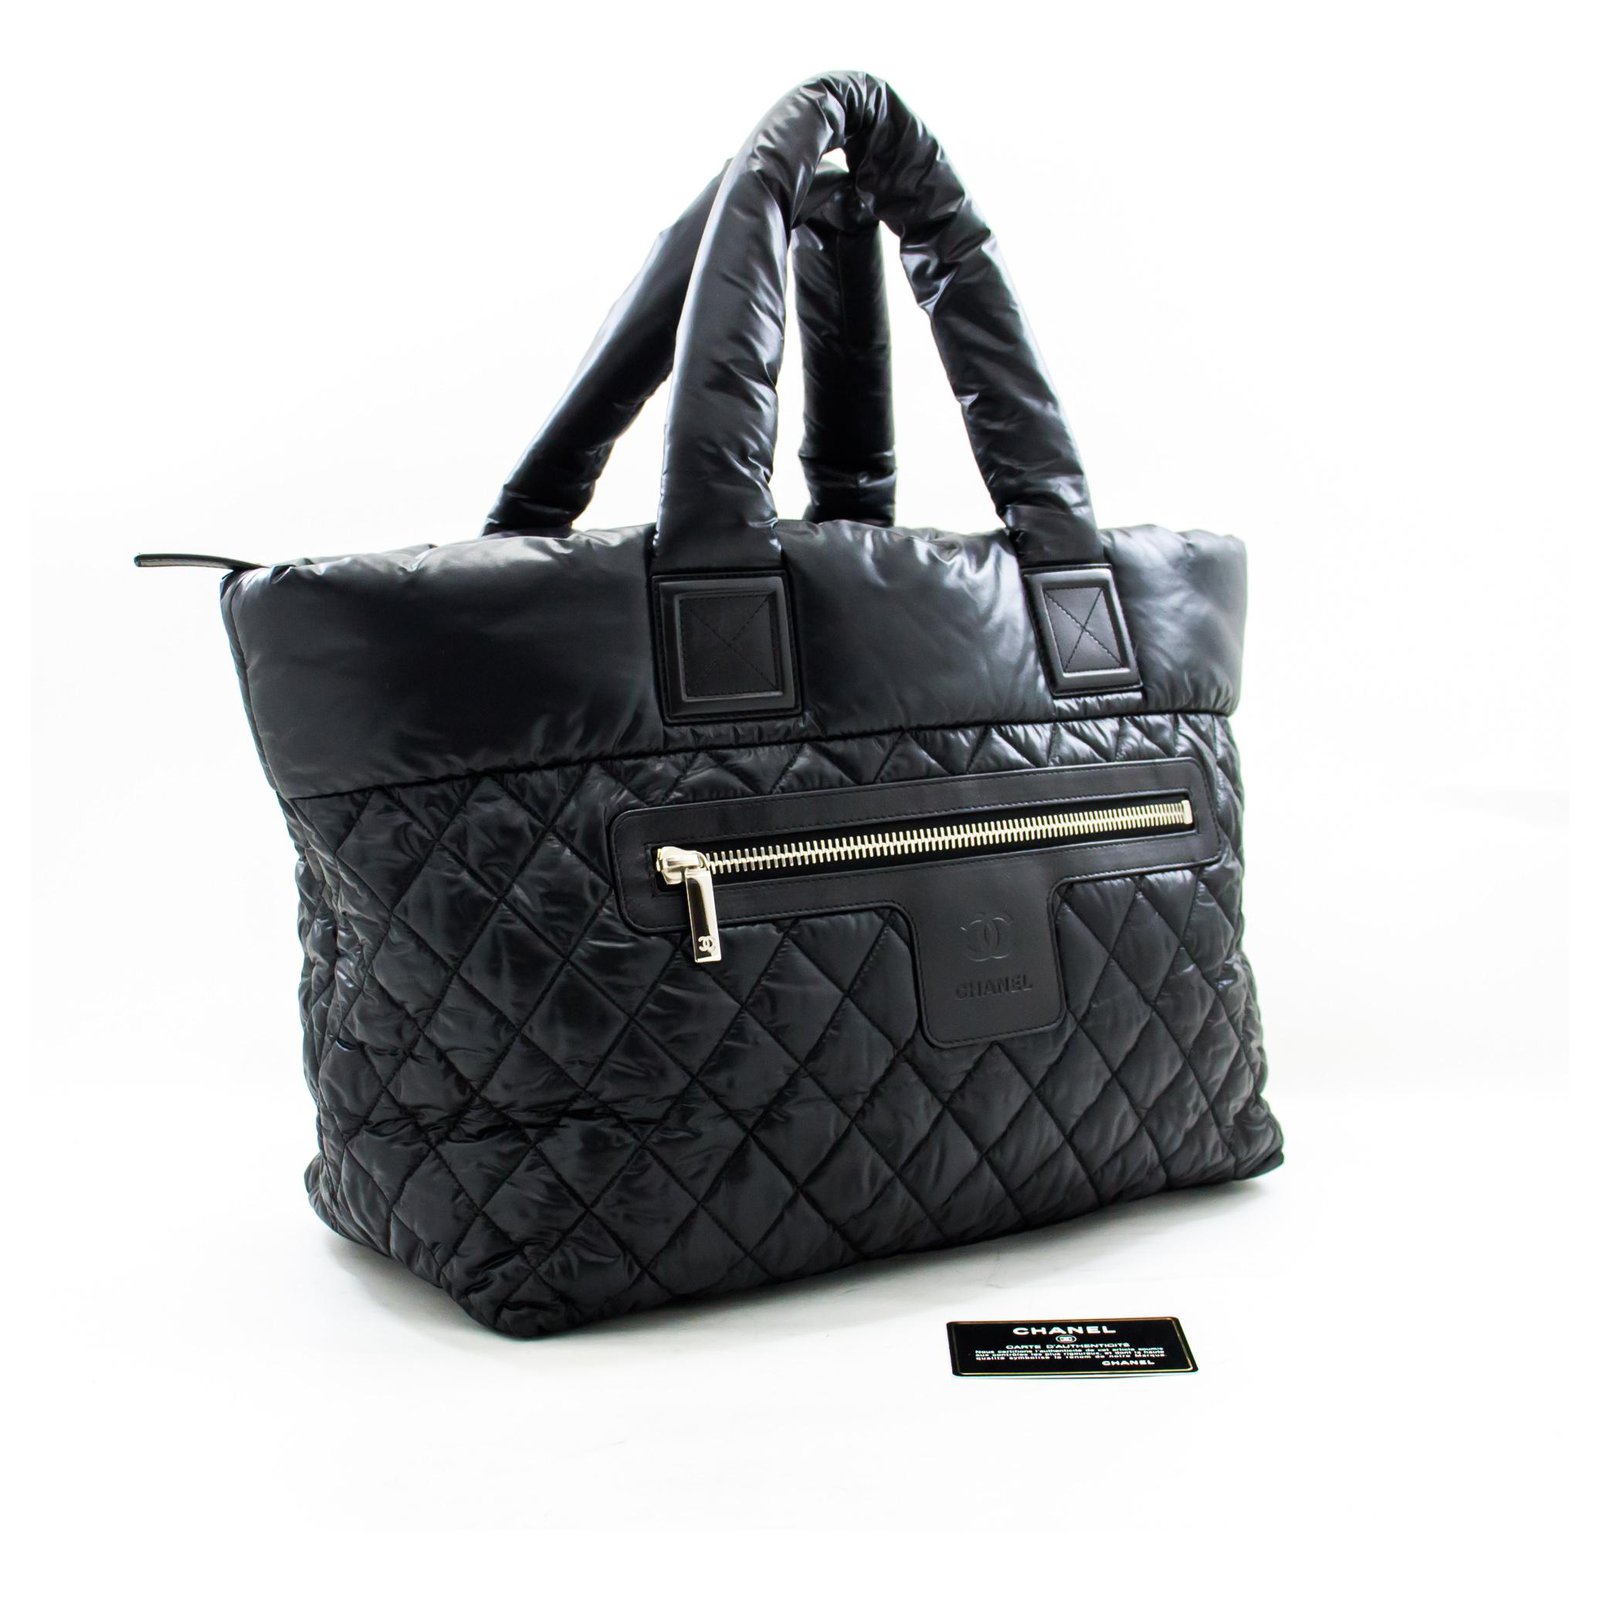 Chanel Coco Cocoon PM Tote Bag Nylon / Leather Black Bordeaux 8610 Rev